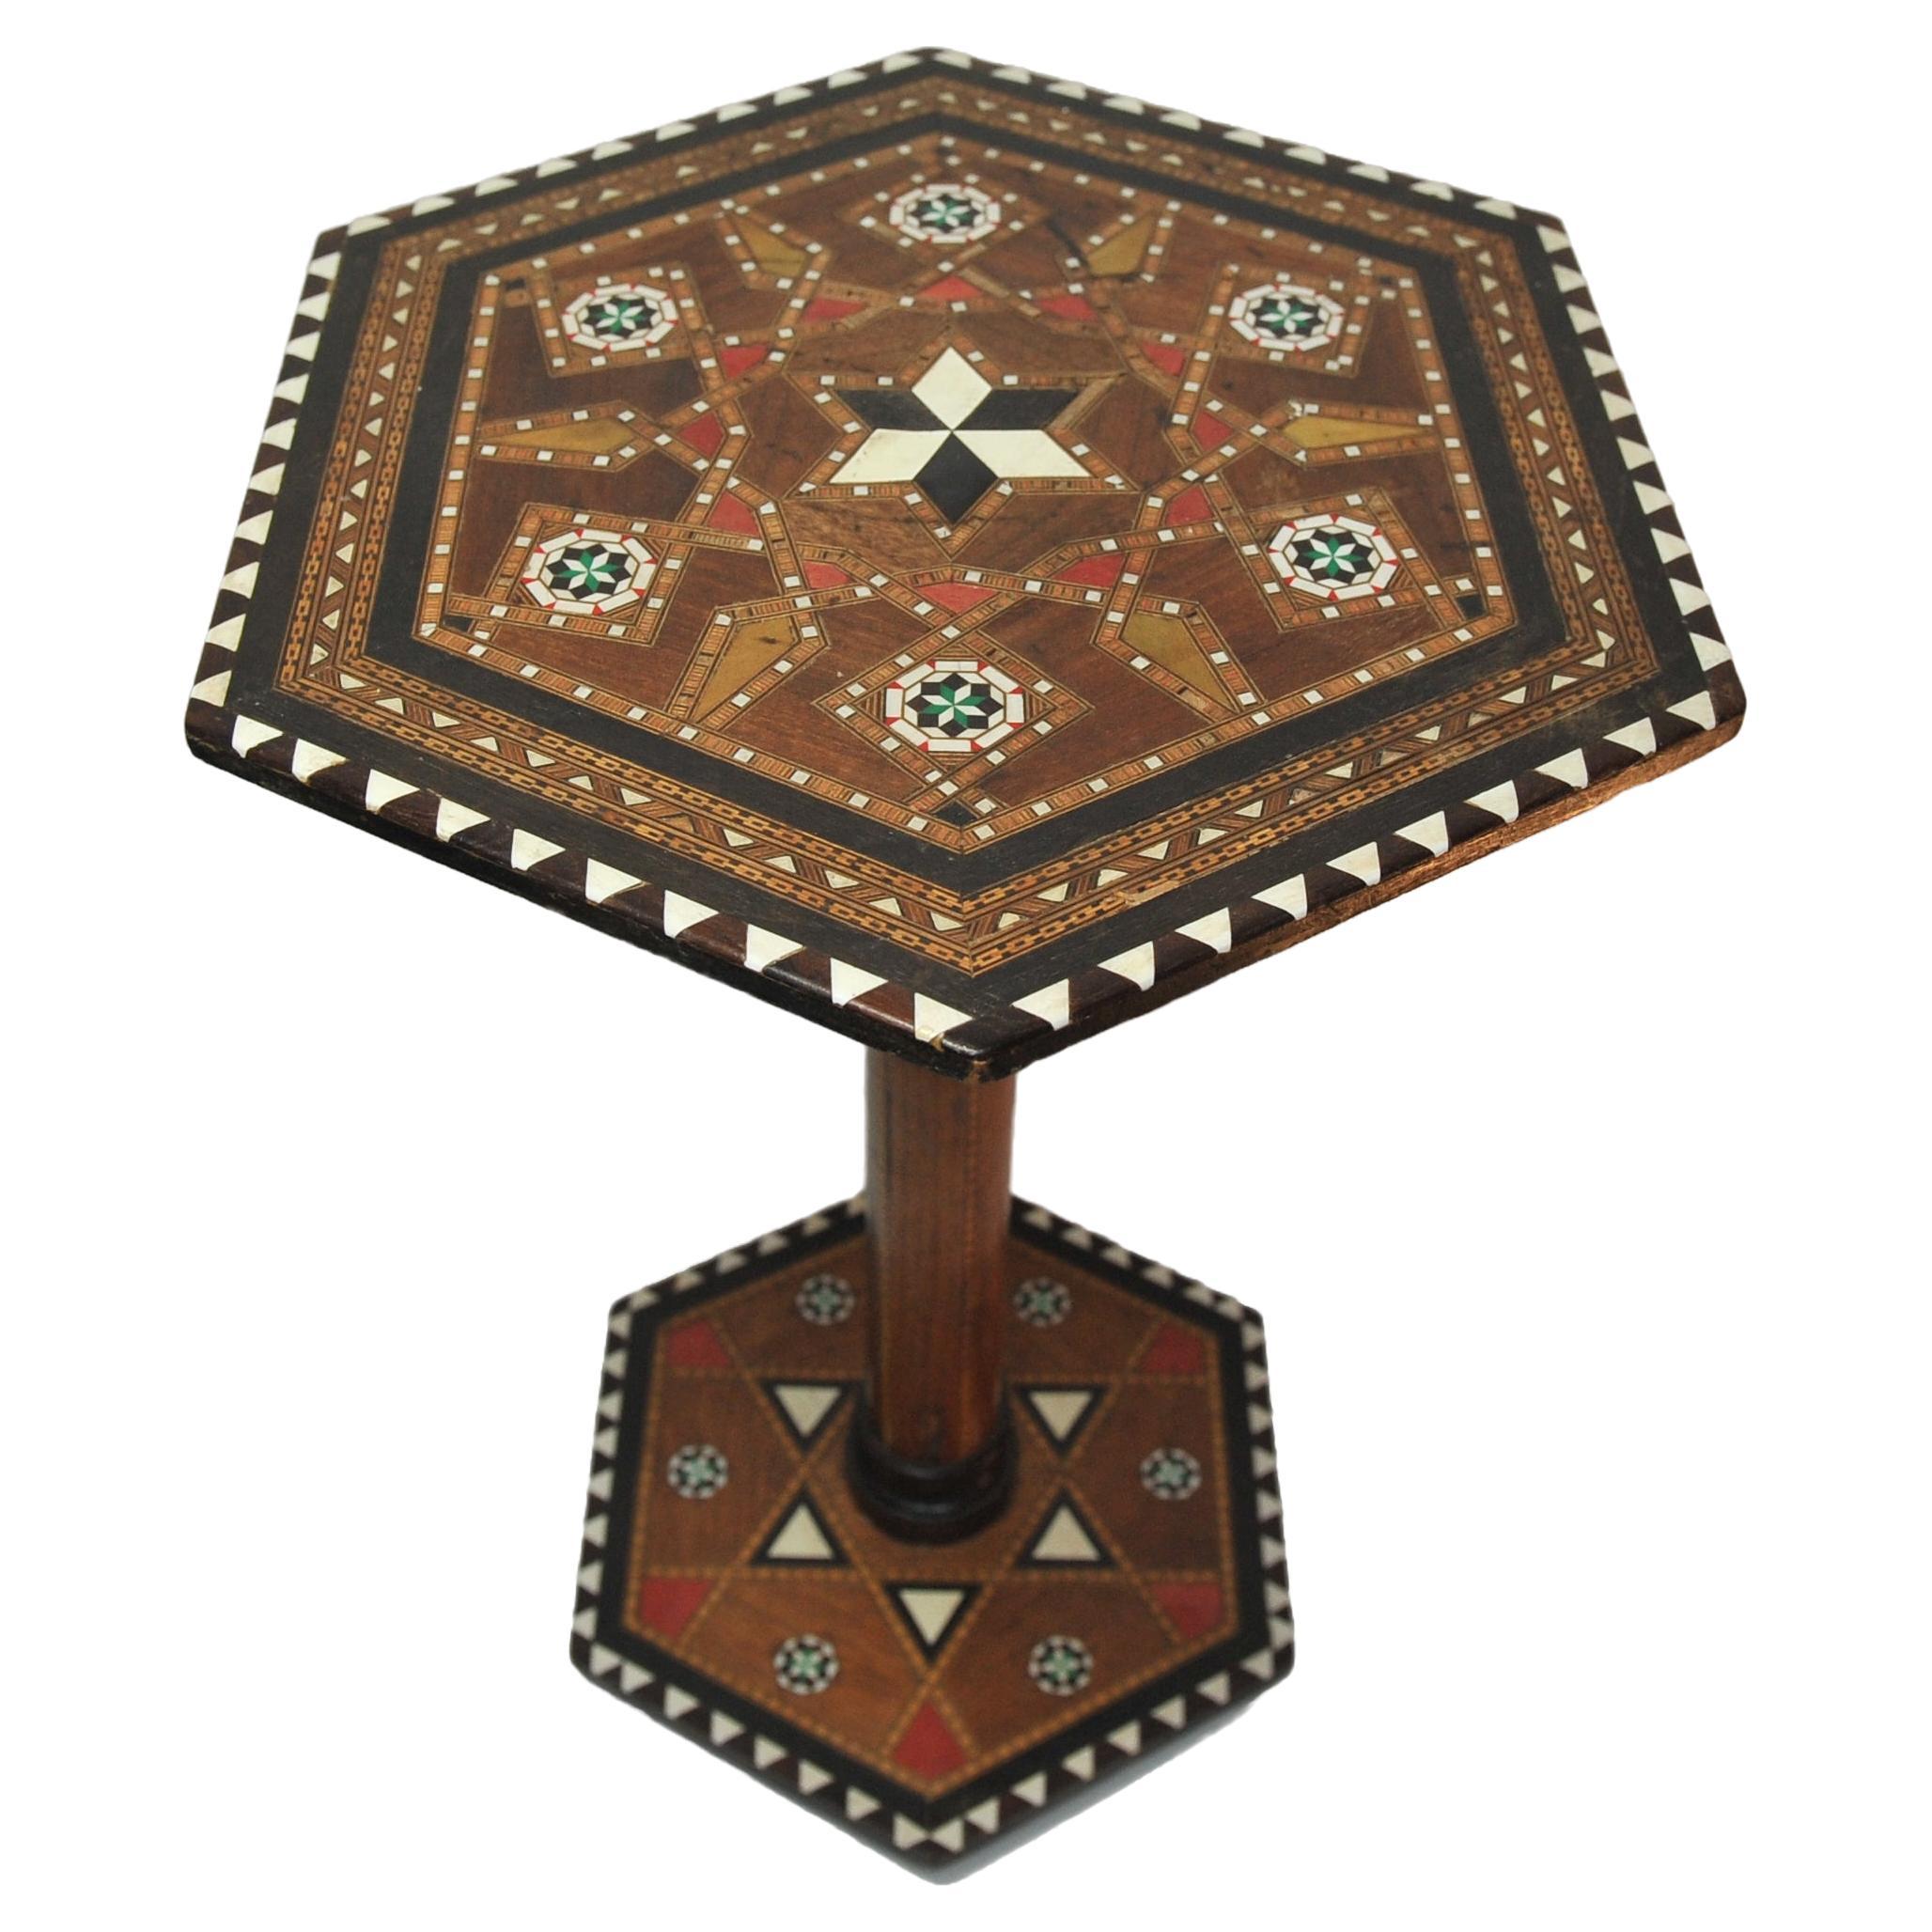 A 19th Century Hexagonal Moorish Fruitwood Tea Table With Mosaic Detailing  For Sale